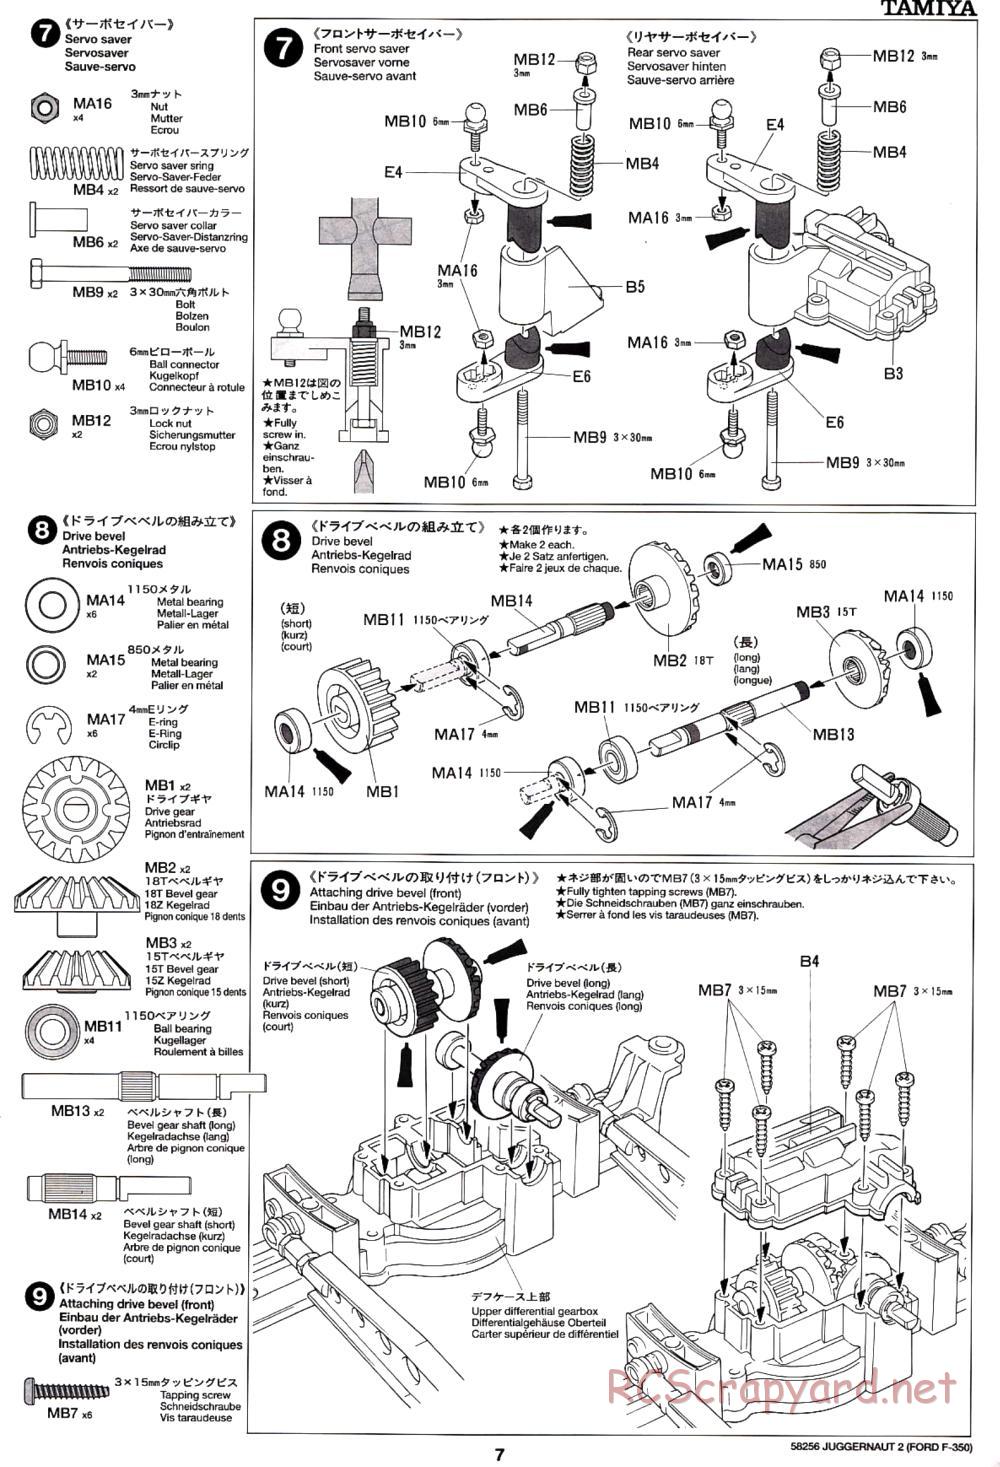 Tamiya - Juggernaut 2 Chassis - Manual - Page 7